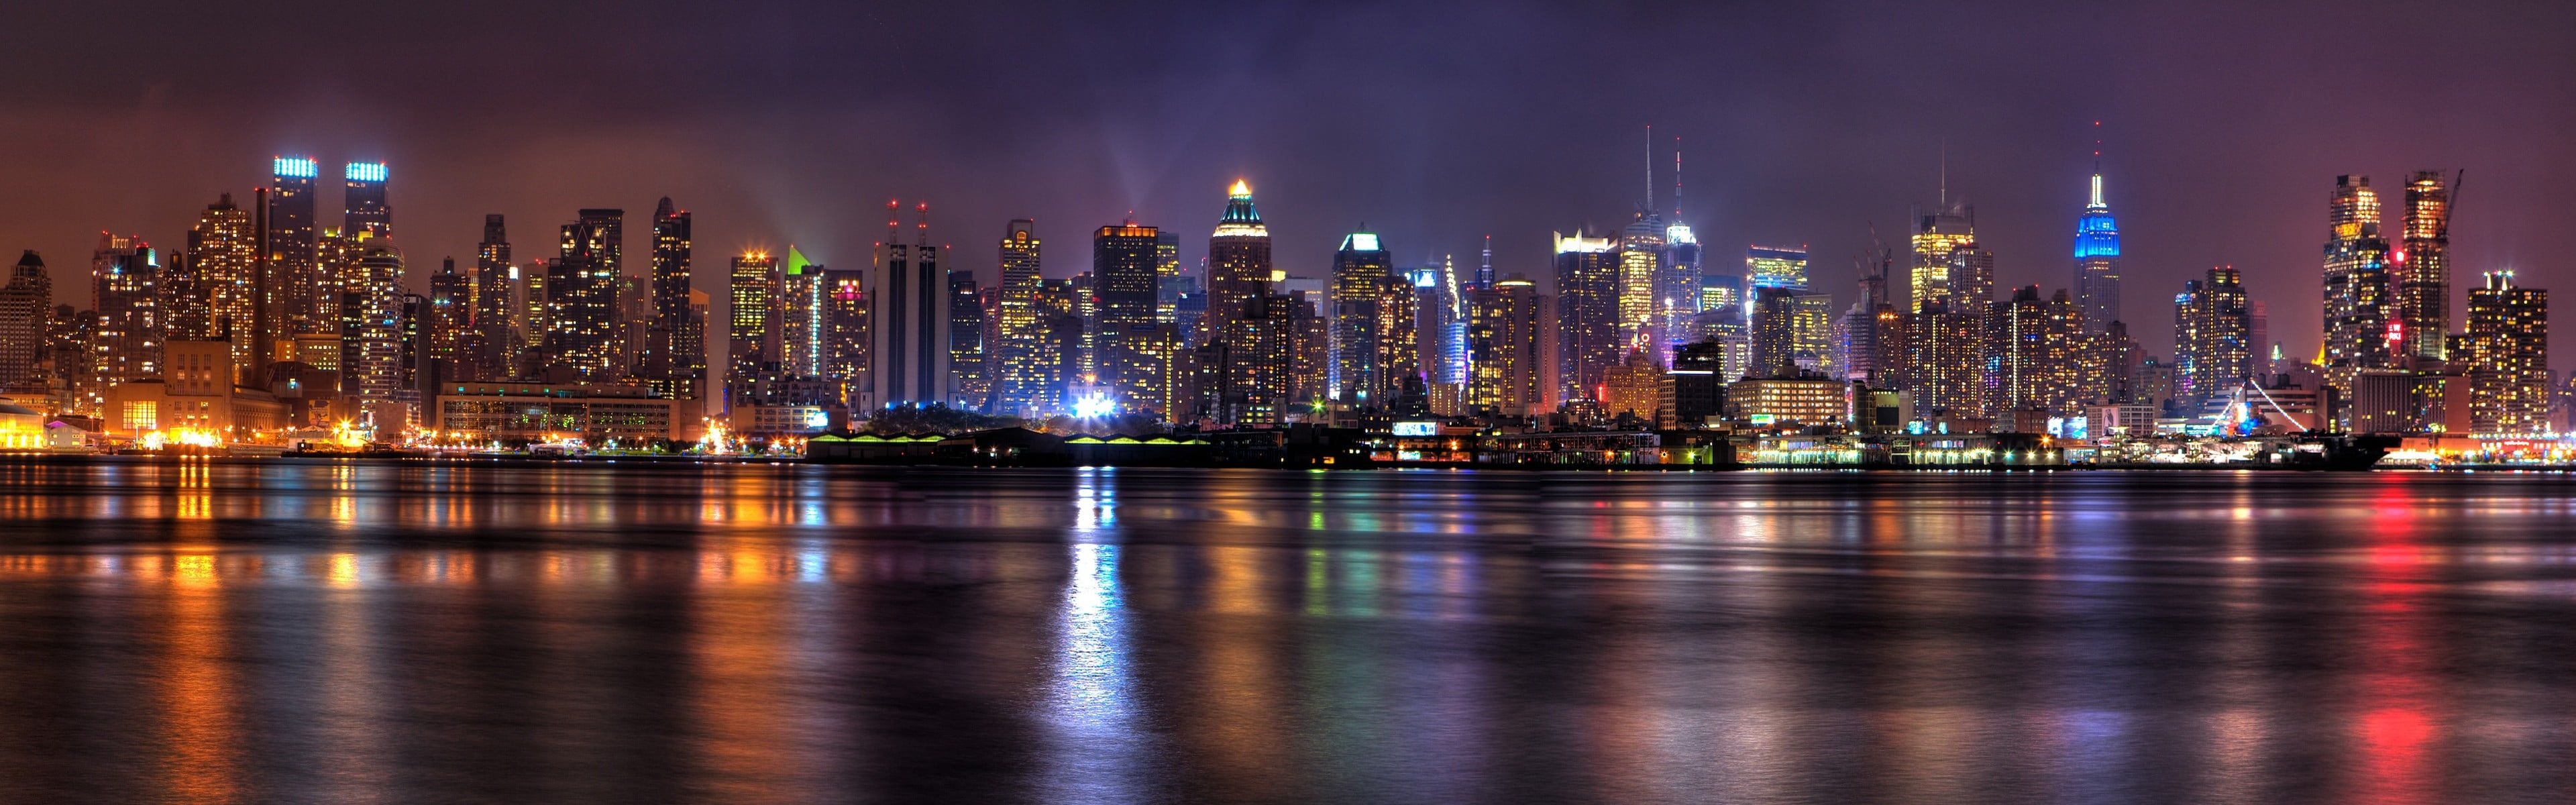 Night Skyline, High-rise buildings, City night lights, Panoramic photography, 3840x1200 Dual Screen Desktop